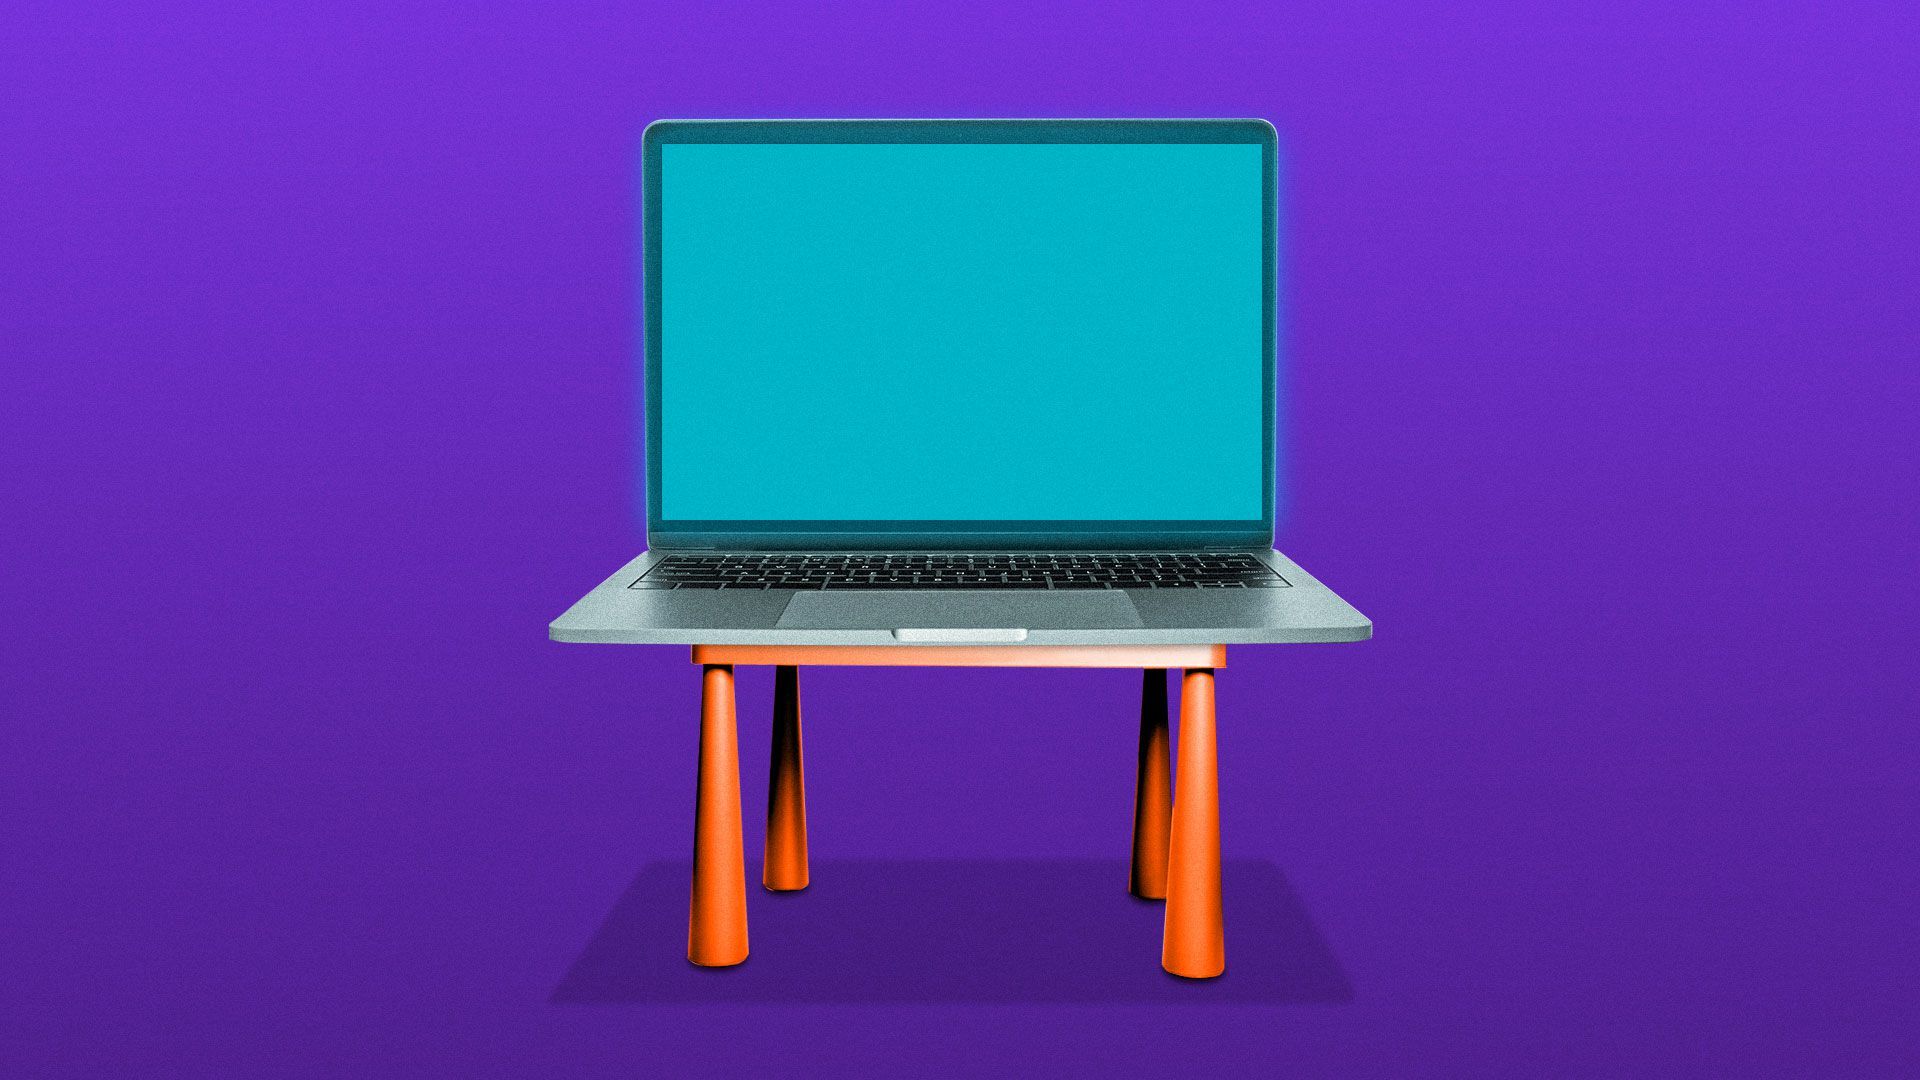 Illustration of laptop on a mini child’s desk.